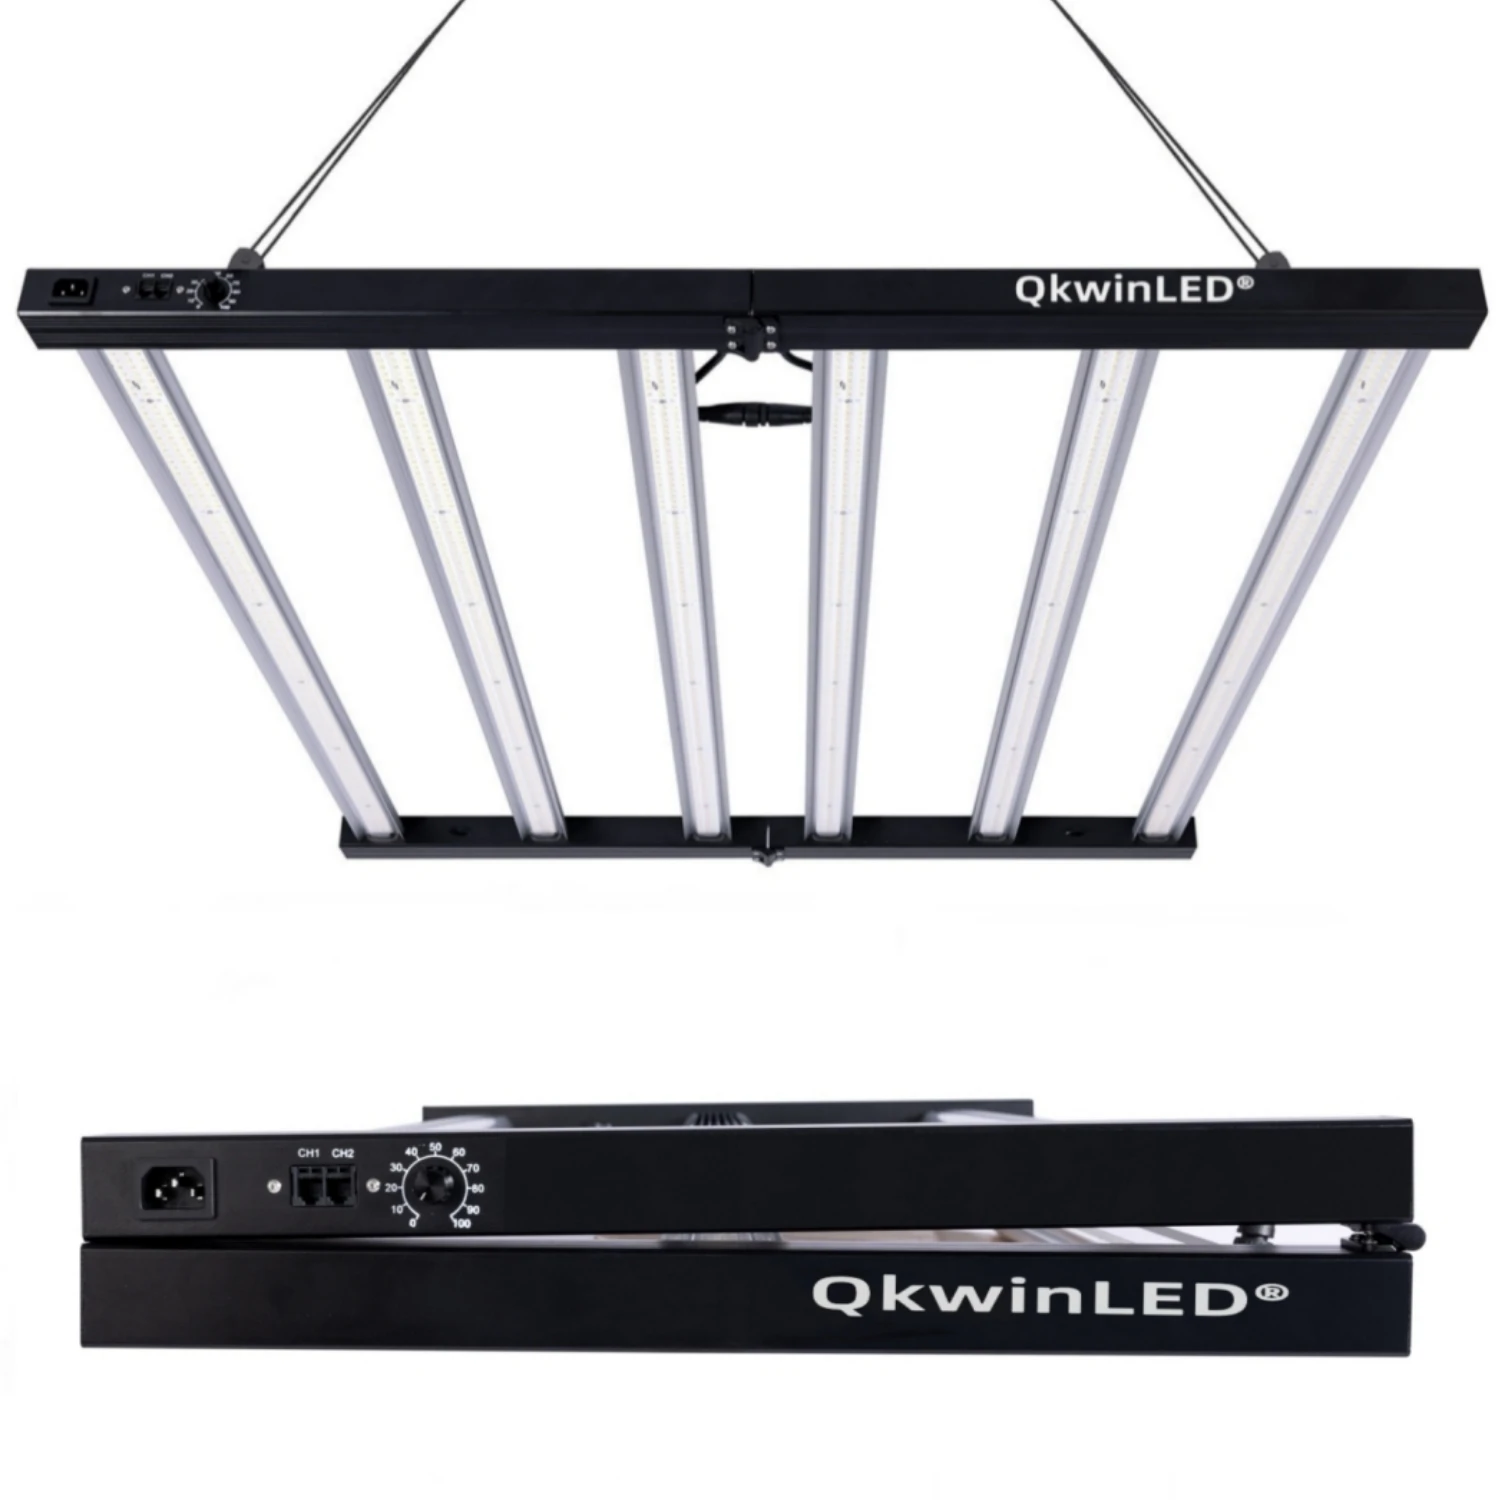 

QKWIN 720Watt 110CM LED Grow Light with samsung 301b leds Bar droshipping